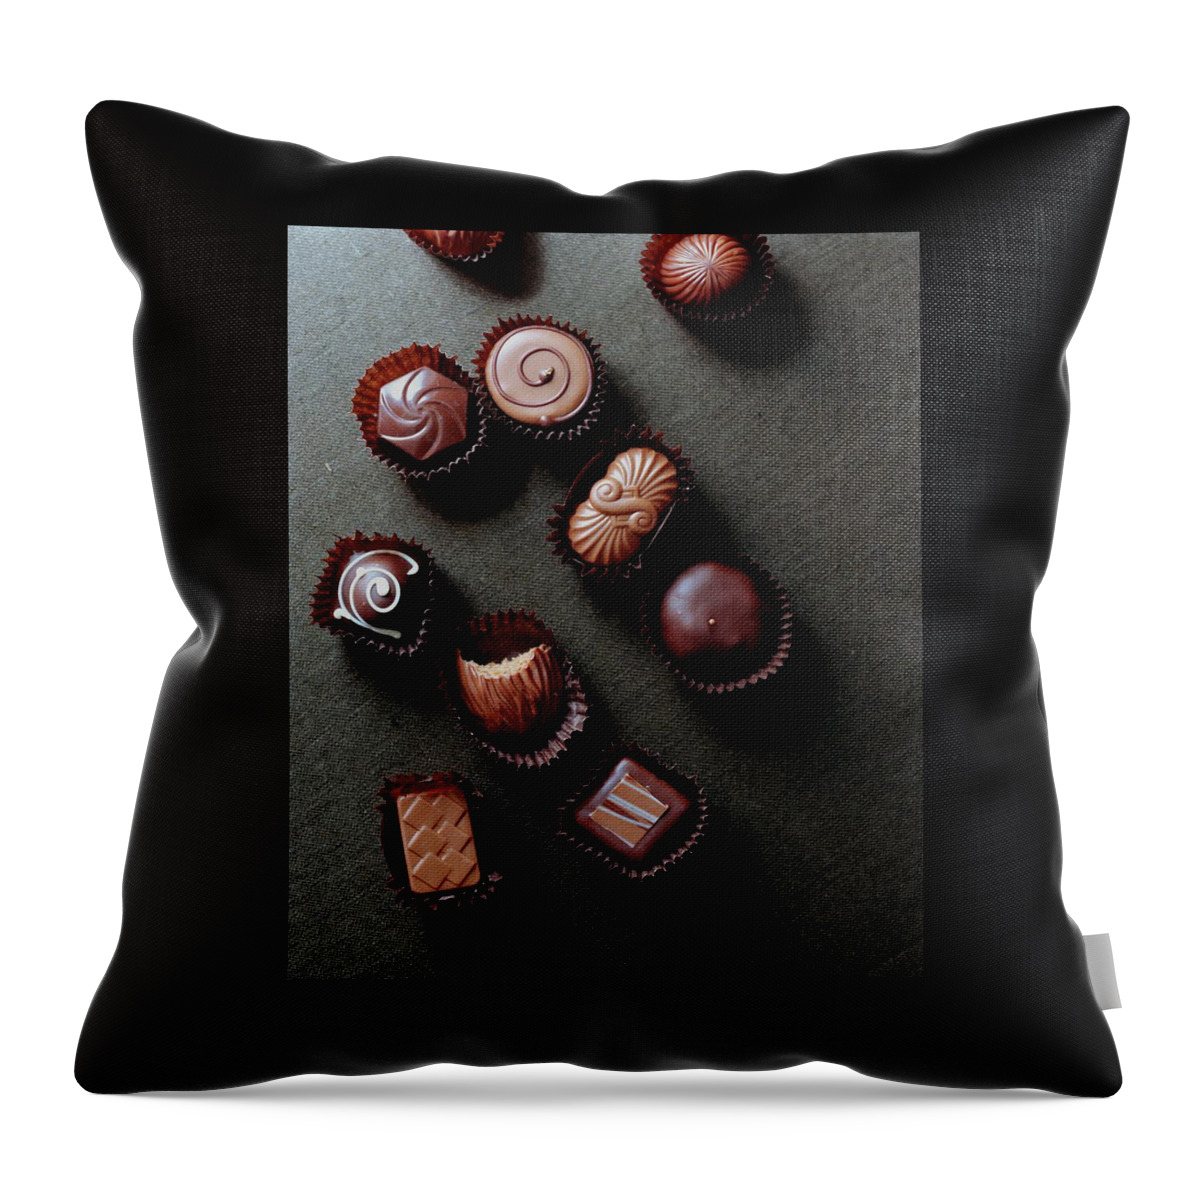 A Selection Of Chocolates Throw Pillow